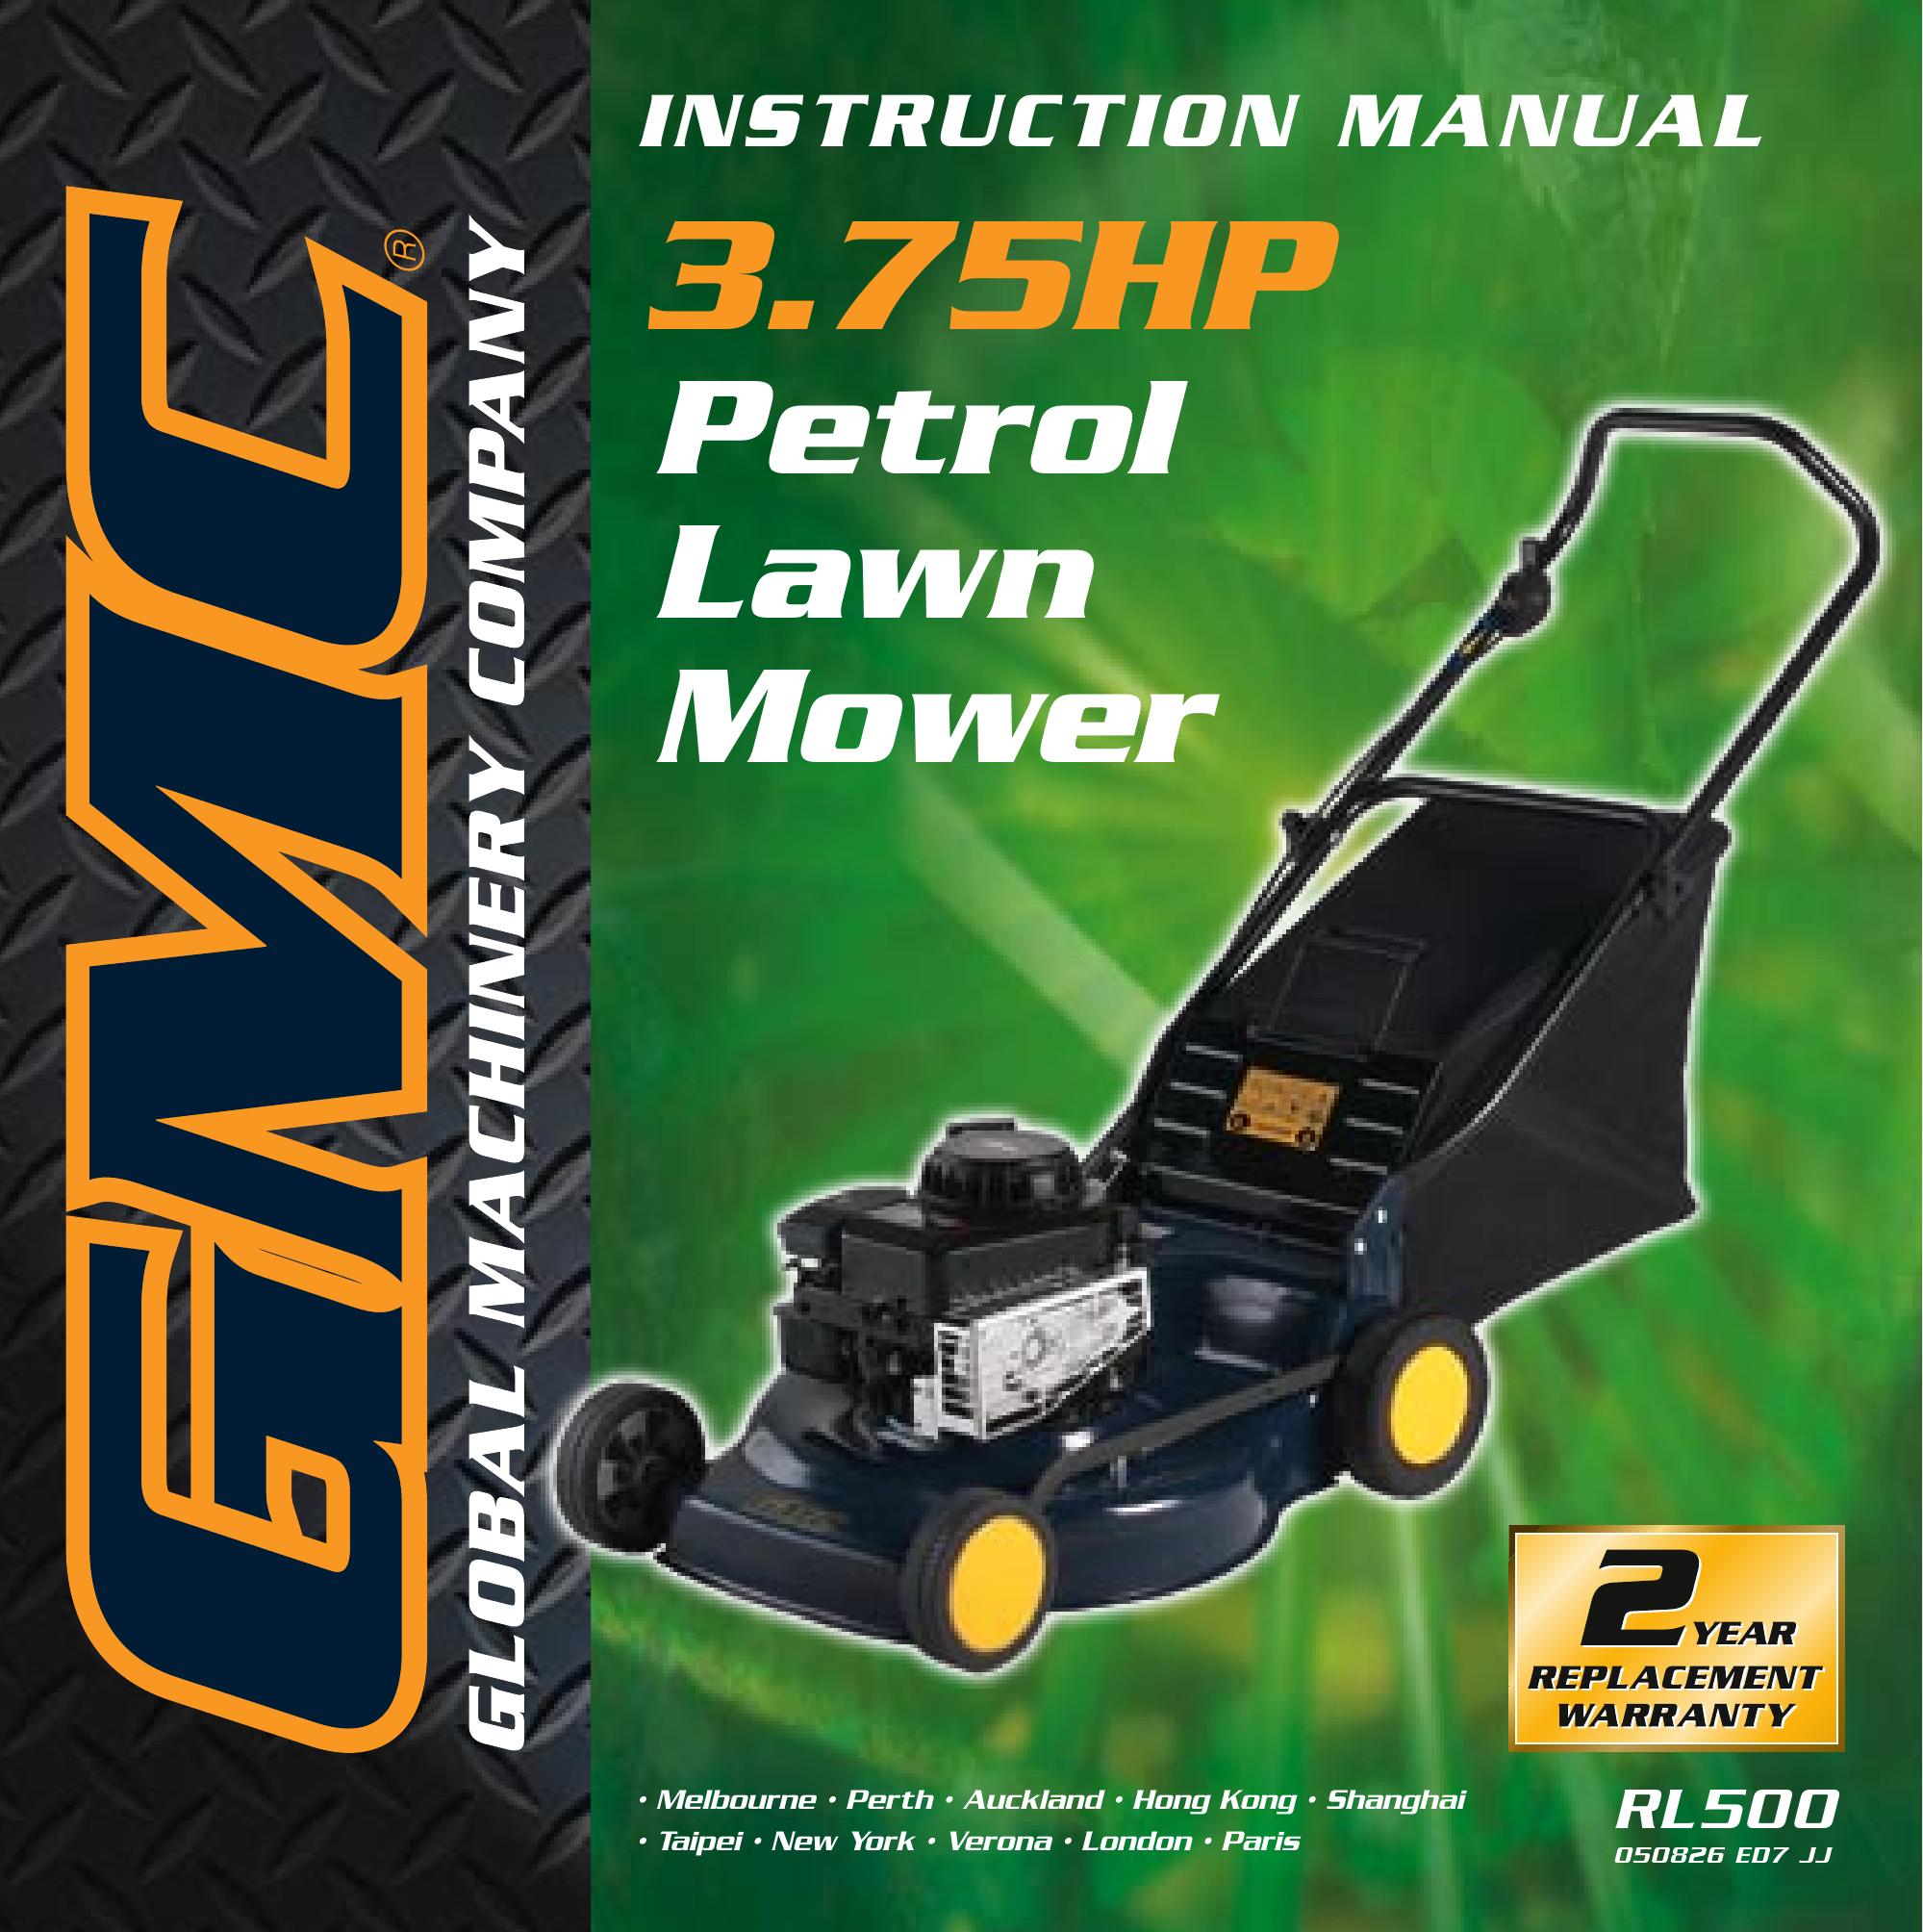 Global Machinery Company RL 500 Lawn Mower User Manual